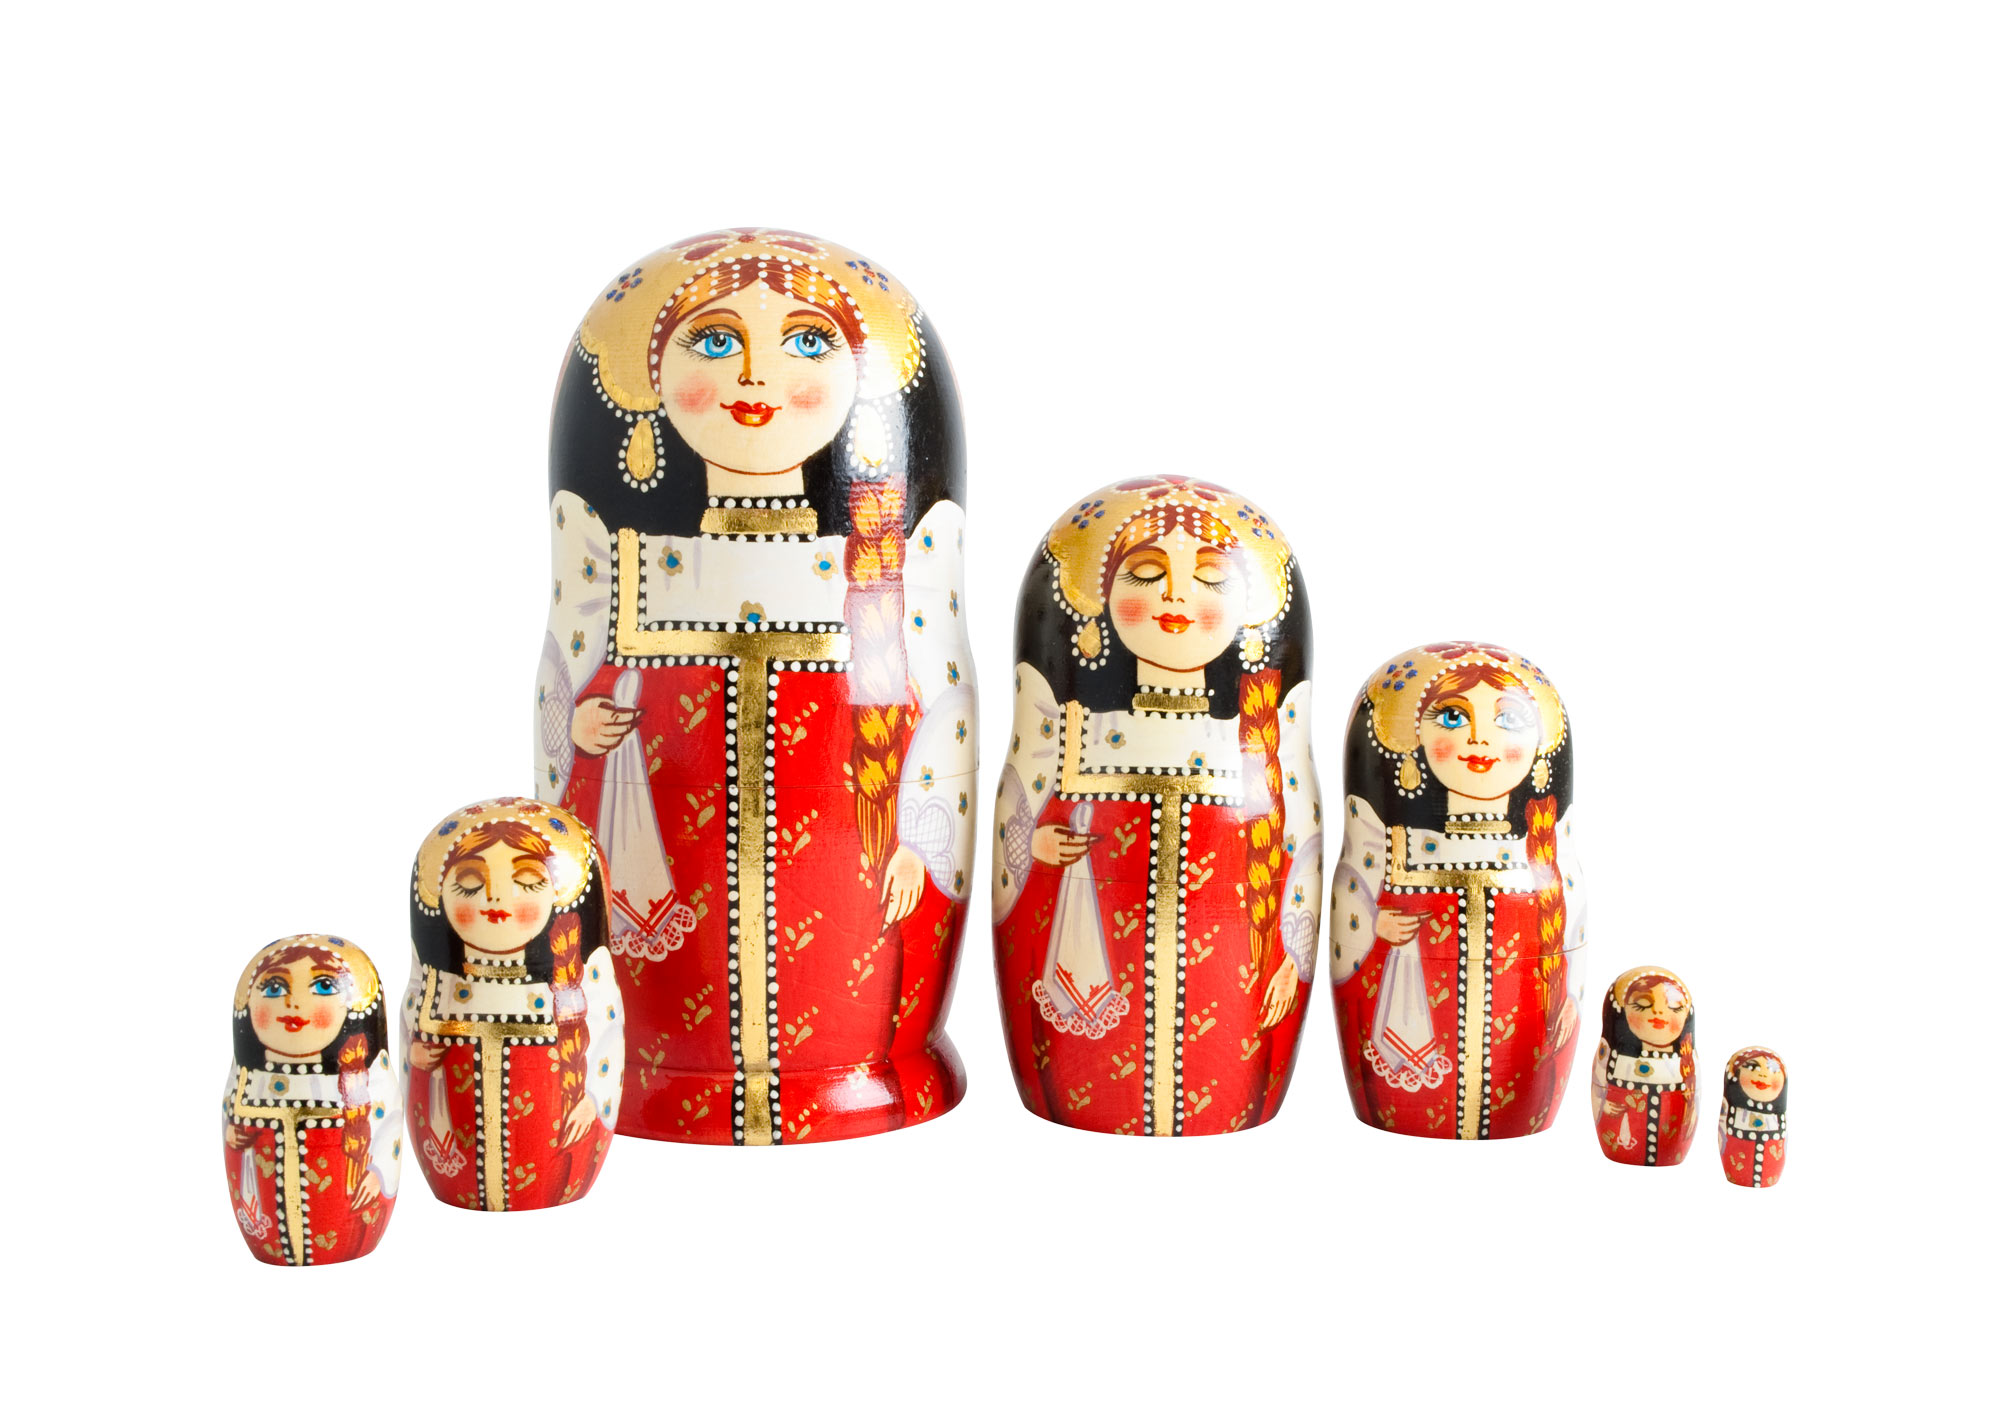 Buy Red & Gold Princess Doll 7pc./8" at GoldenCockerel.com